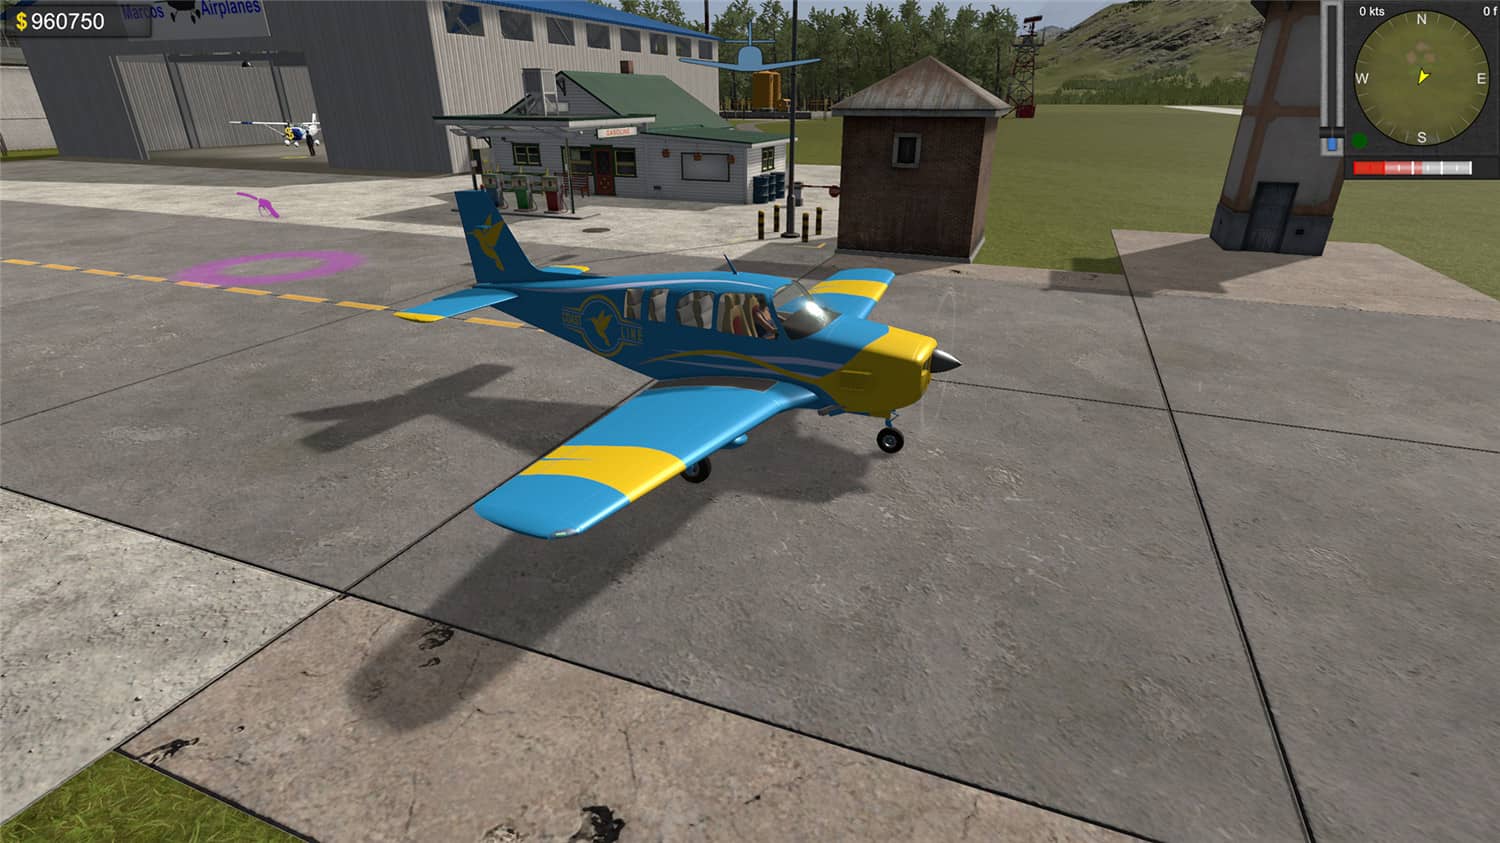 海岸线飞行模拟器/Coastline Flight Simulator-5